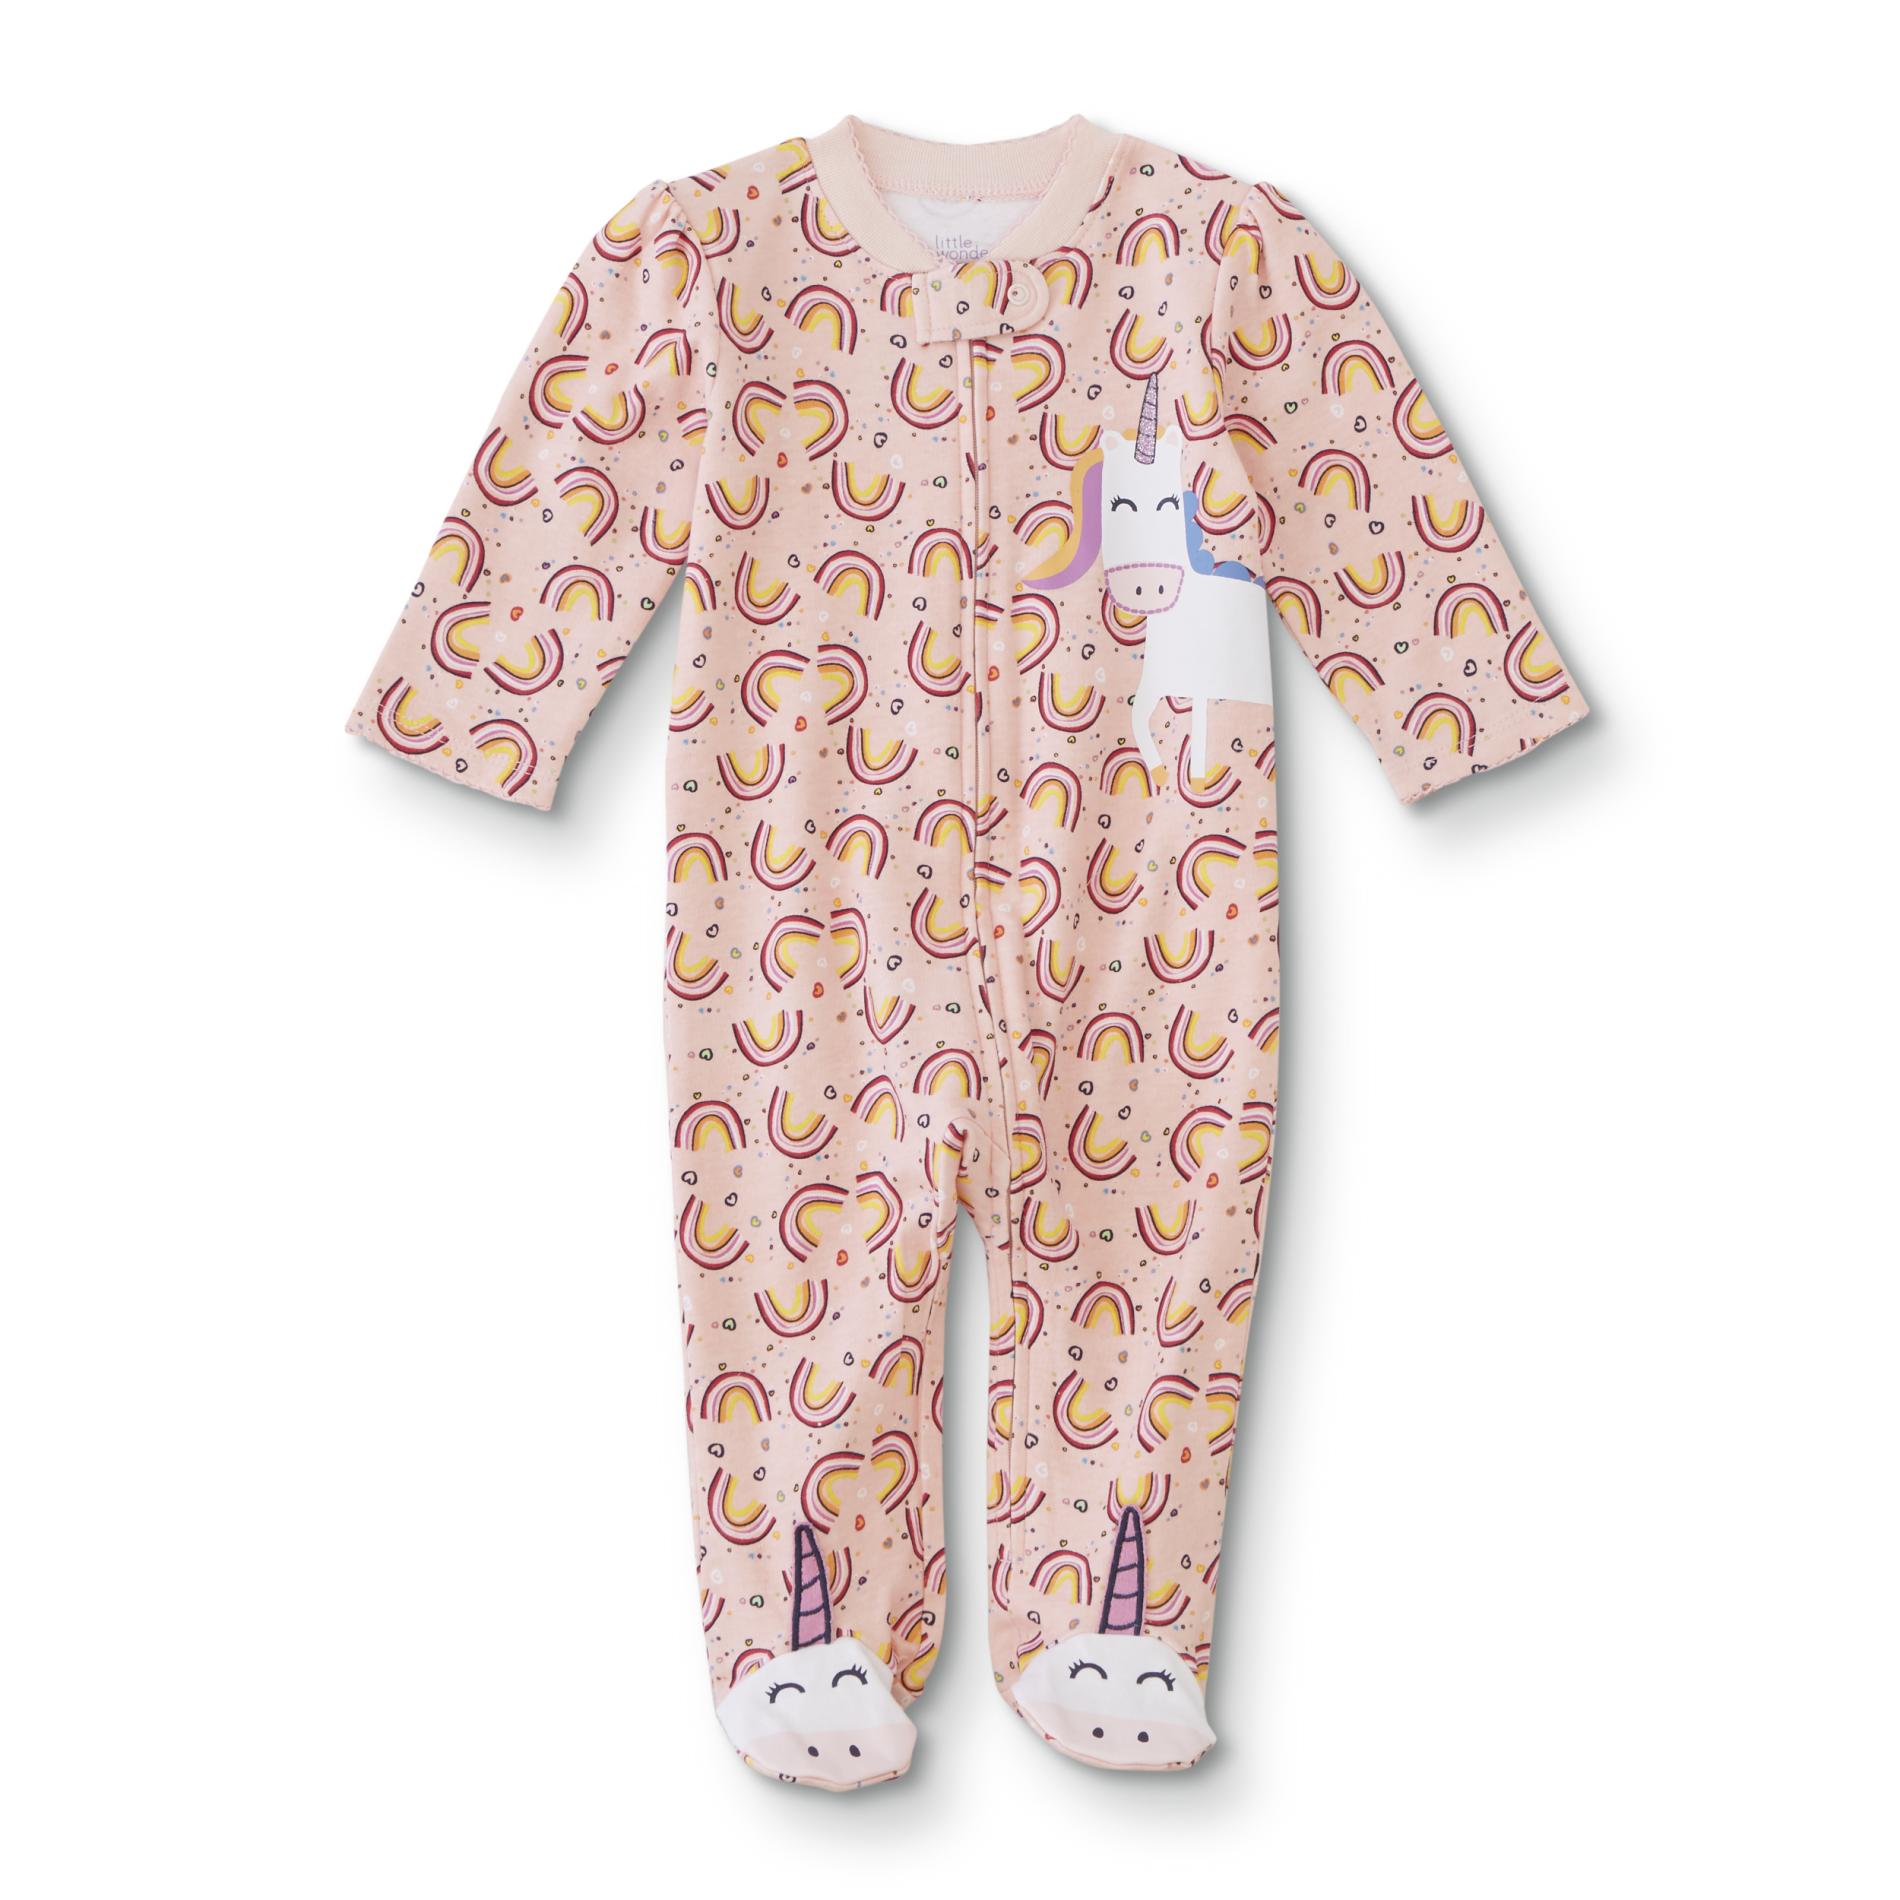 Little Wonders Infant Girls' Footed Pajamas - Rainbow/Unicorn